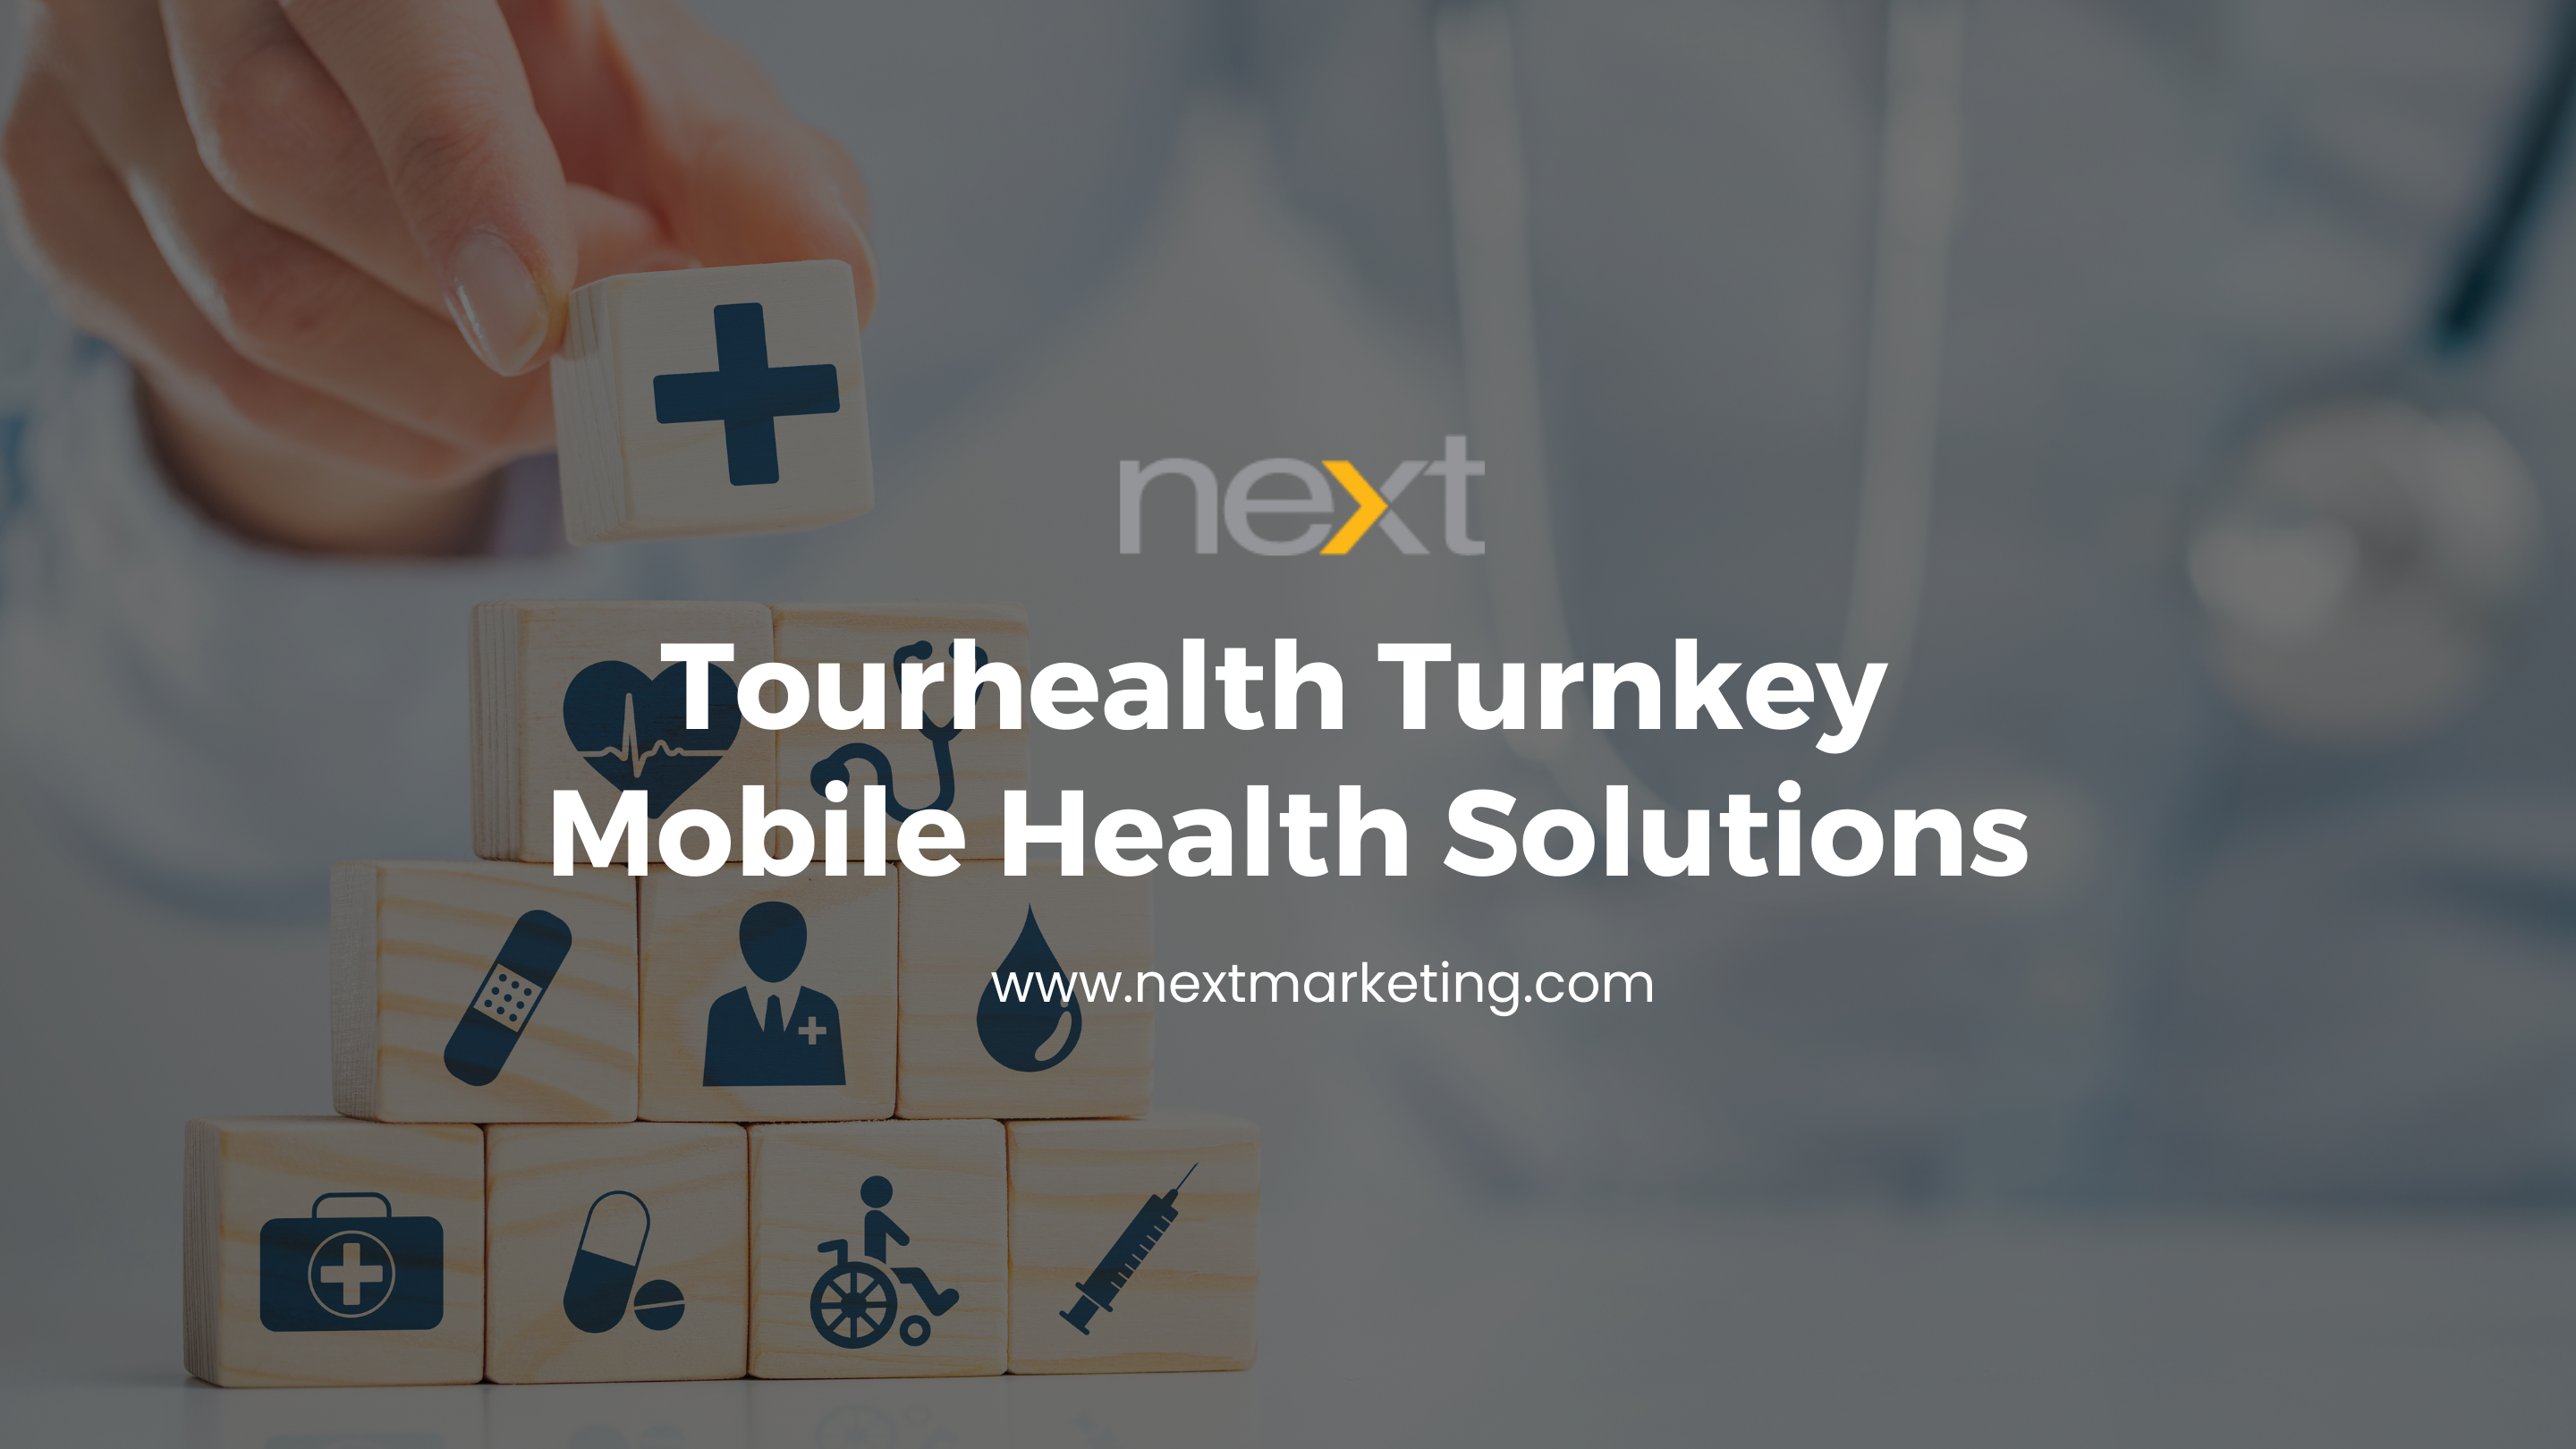 Tourhealth Turnkey Mobile Health Solutions